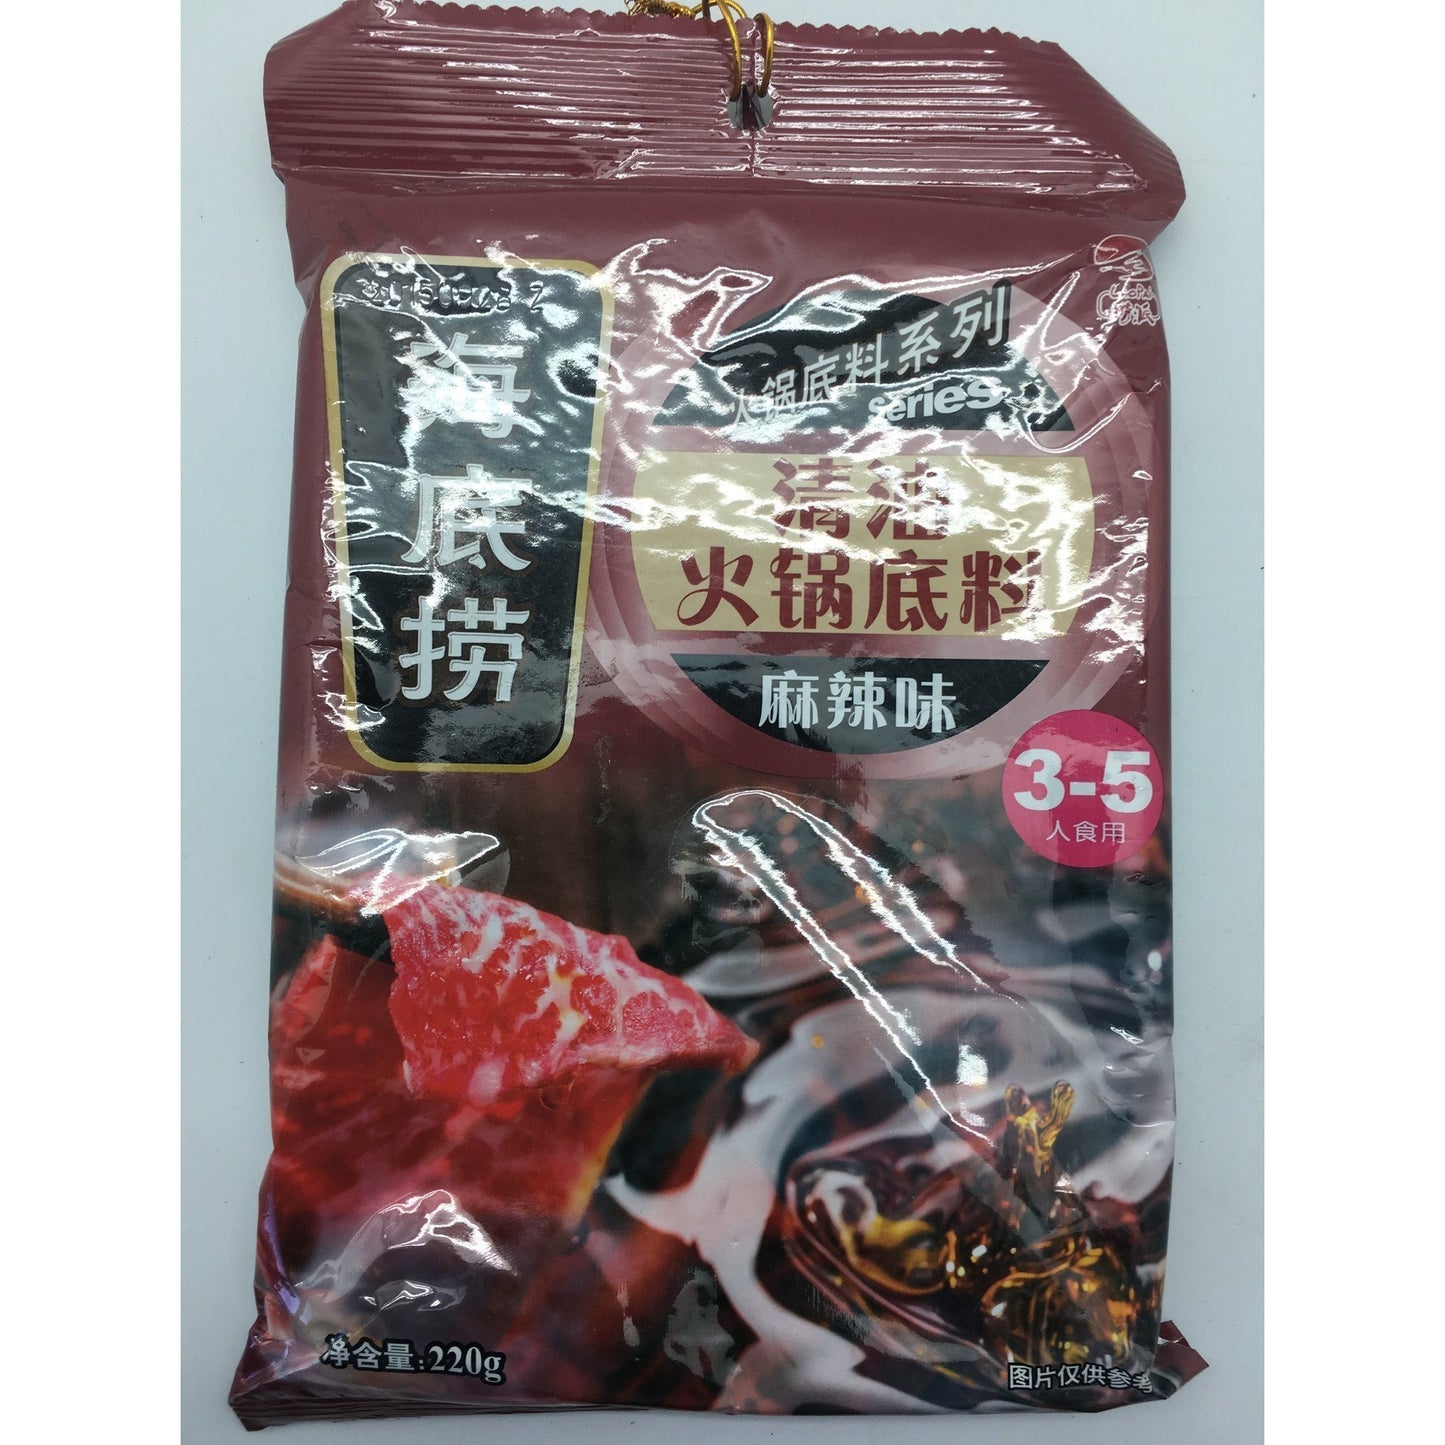 Q027S Hai Di Lao Brand - Hot Pot Soup Base 200g - 34 bags / 1 CTN - New Eastland Pty Ltd - Asian food wholesalers